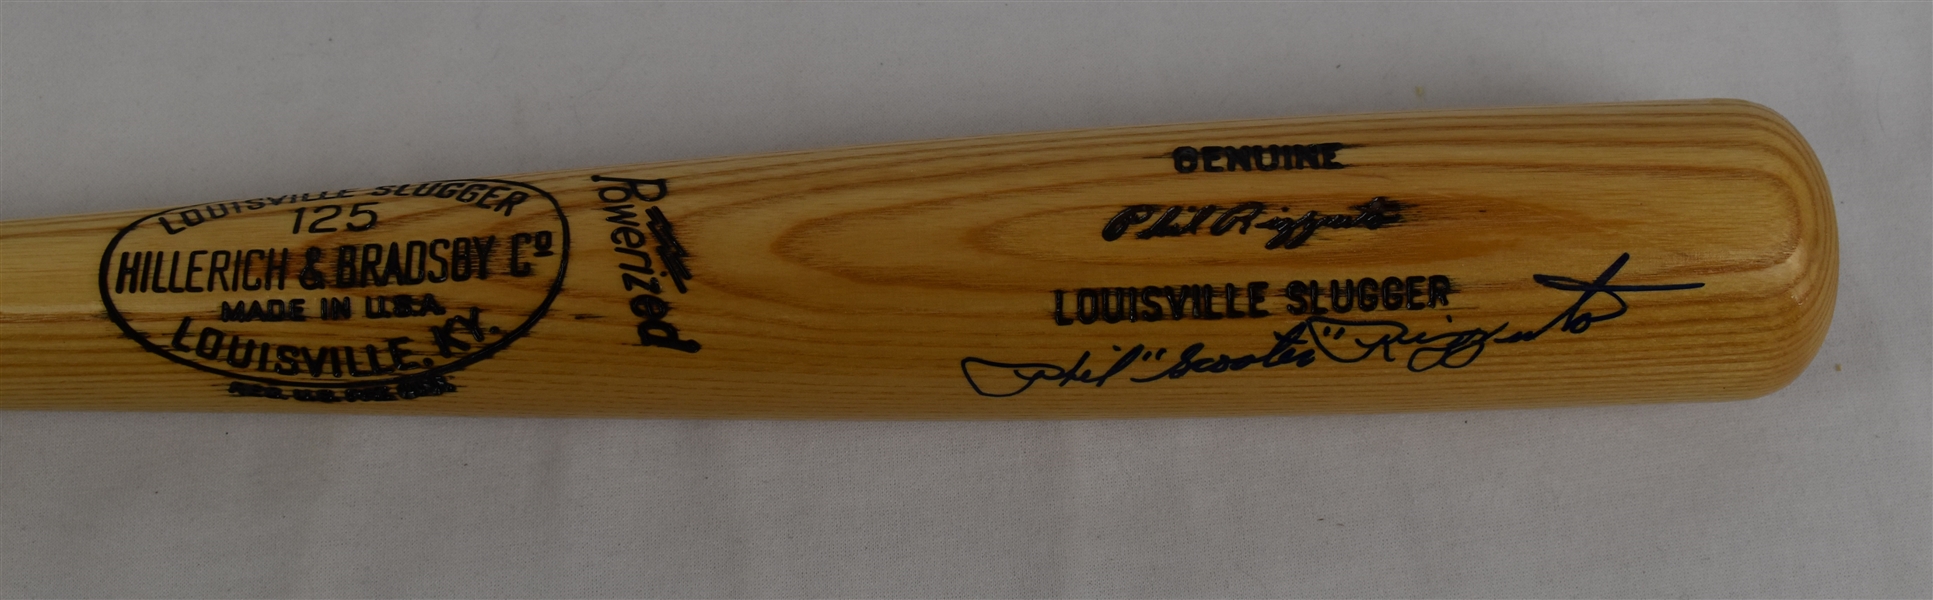 Phil “Scooter” Rizzuto Autographed Louisville Slugger Baseball Bat